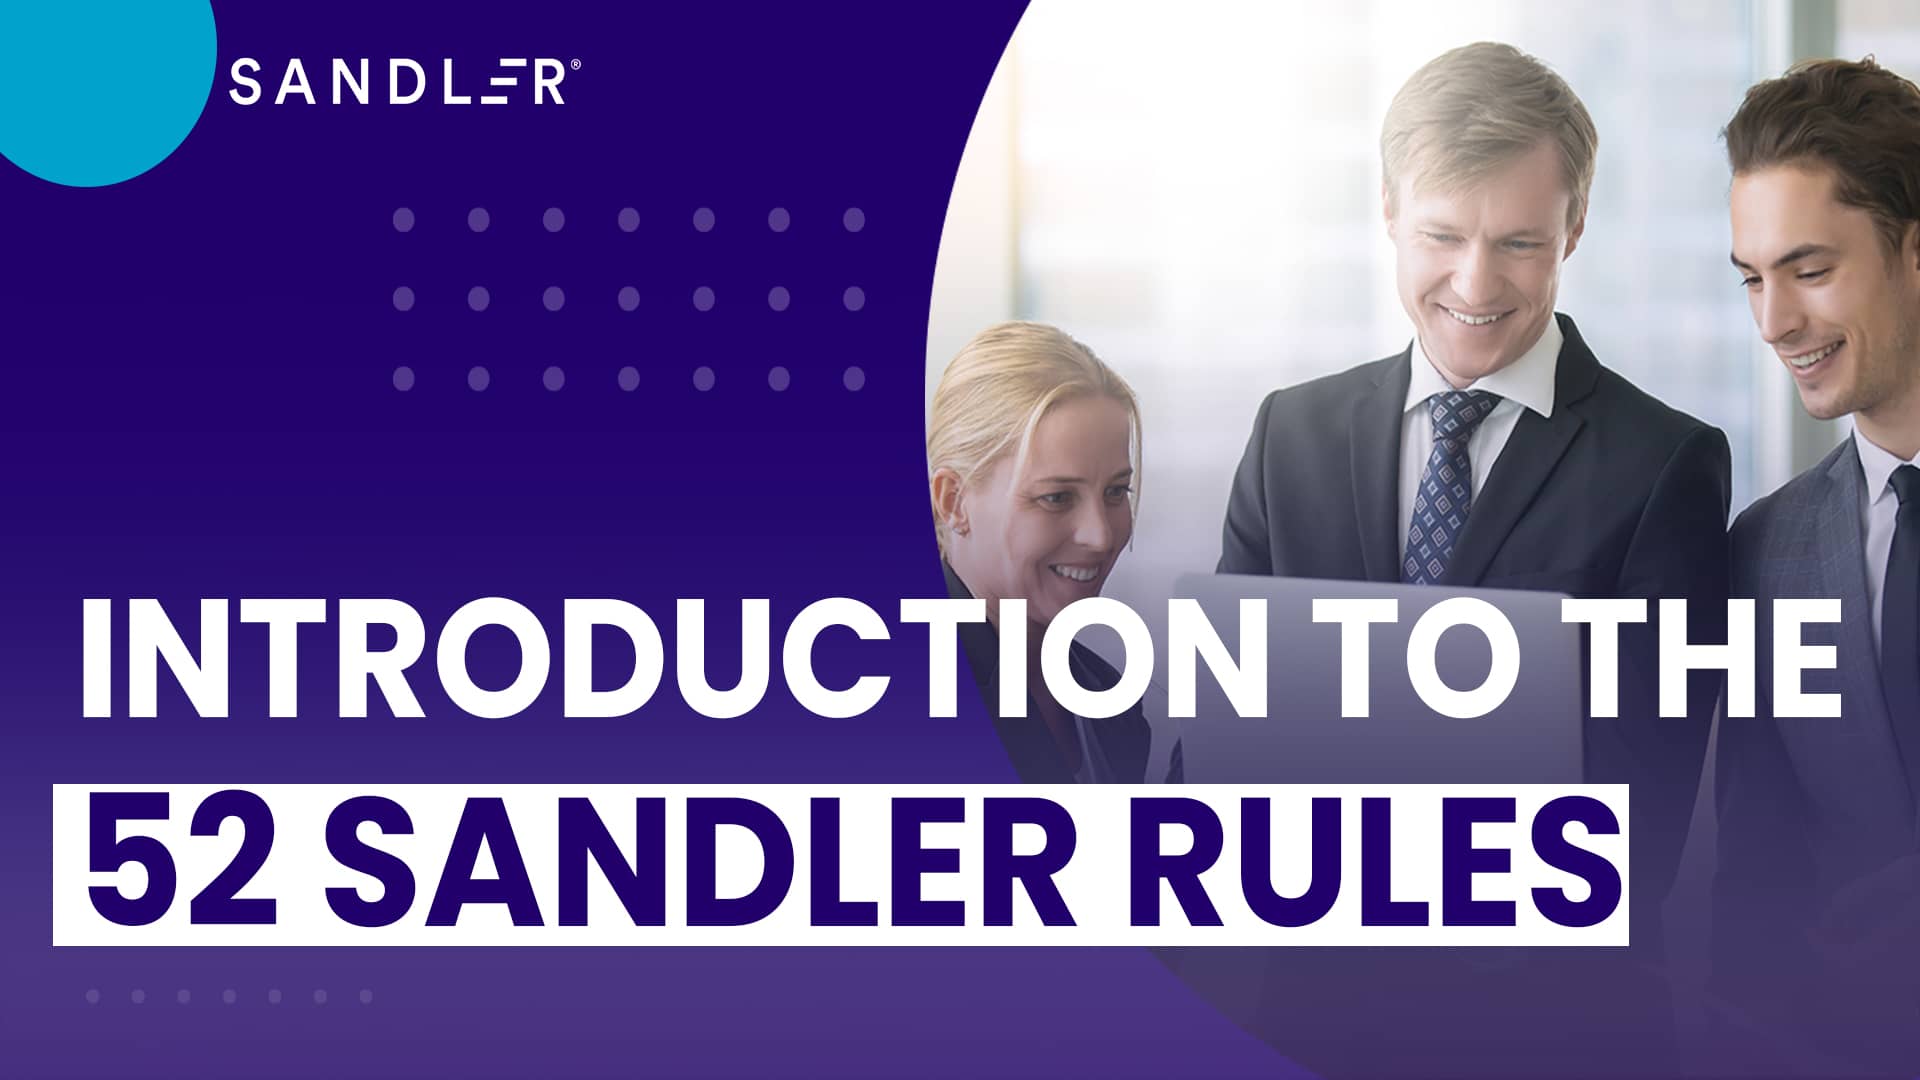 The New 52 Sandler Rules